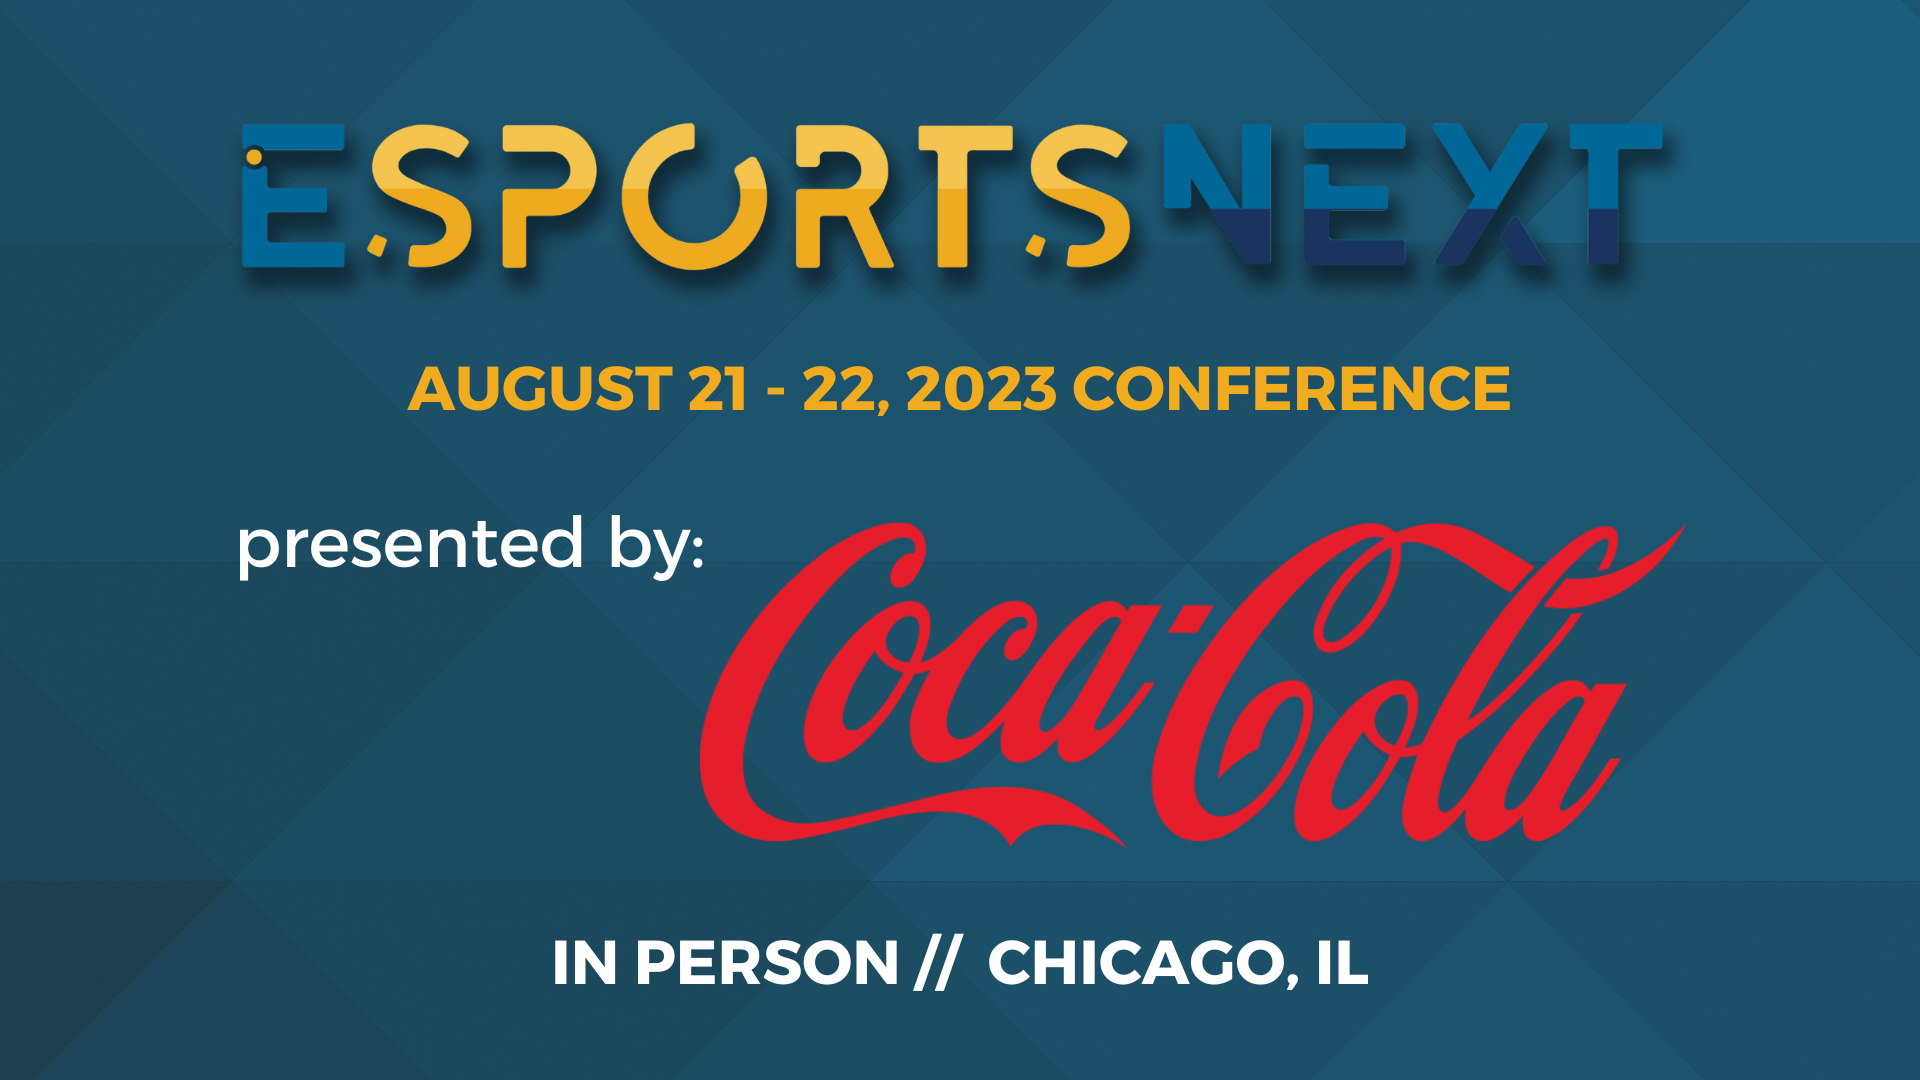 Coca-Cola Partners With Wild Rift Esports – SportsTravel